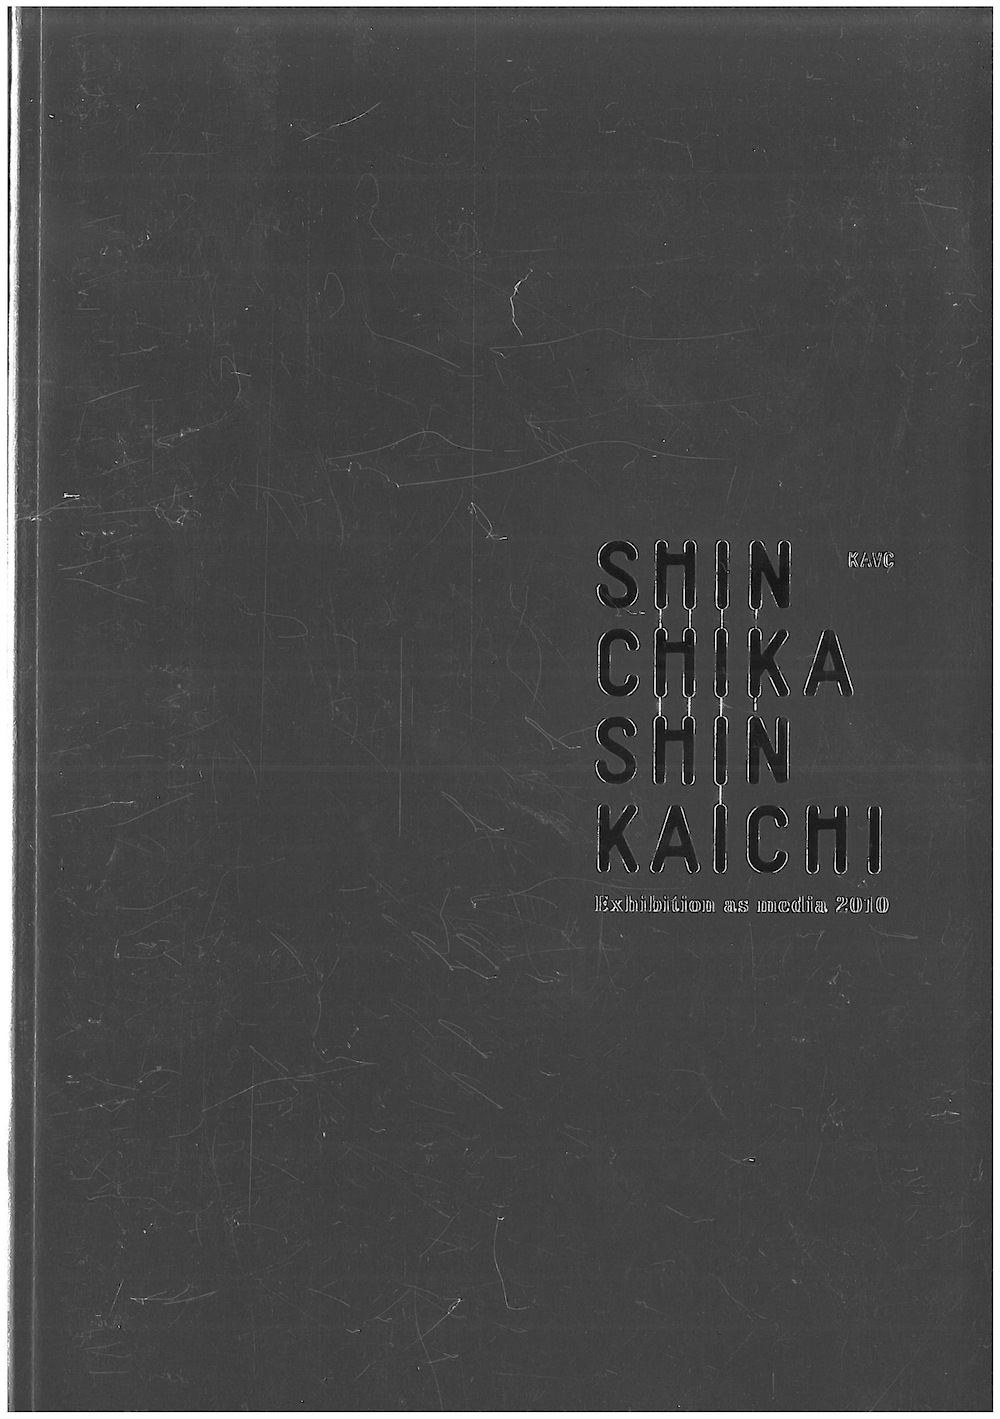 Exhibition as media 2010 「SHINCHIKA SHINKAICHI」シンチカシール付き